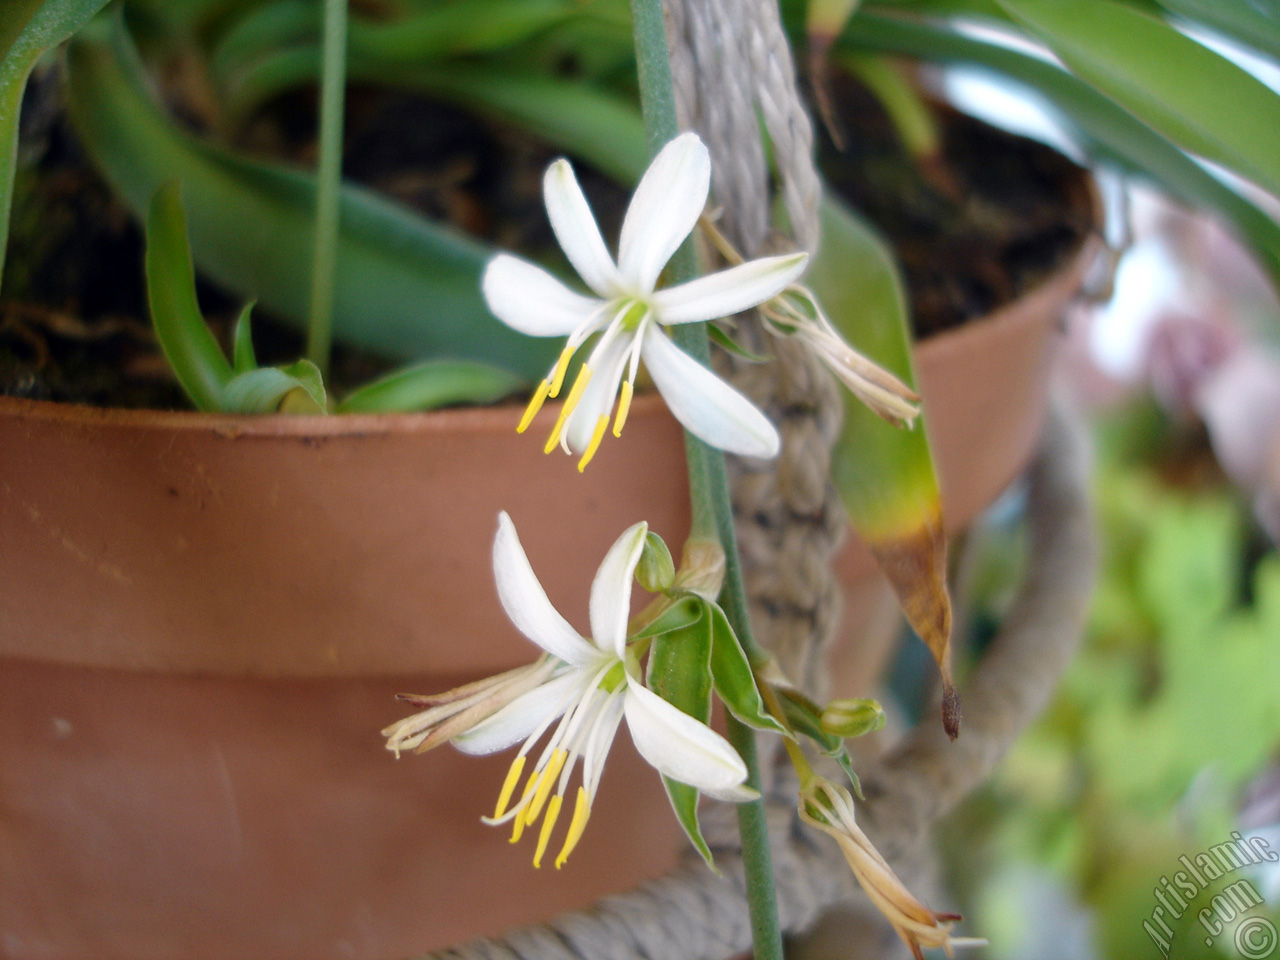 A plant with tiny white flowers looks like mini lilies.
